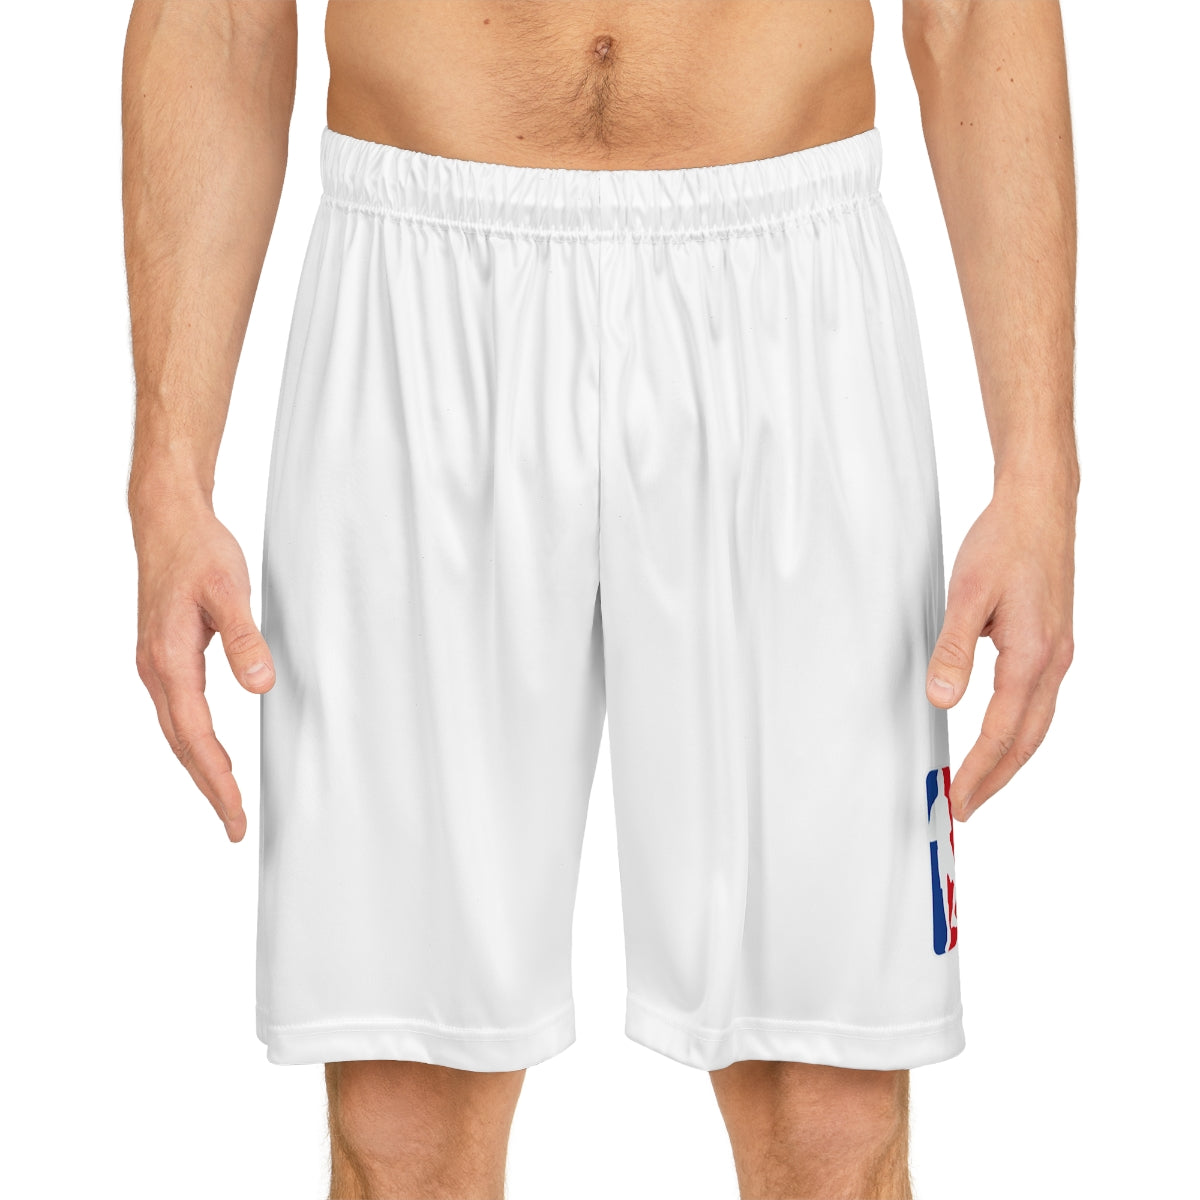 NBA Basketball Shorts